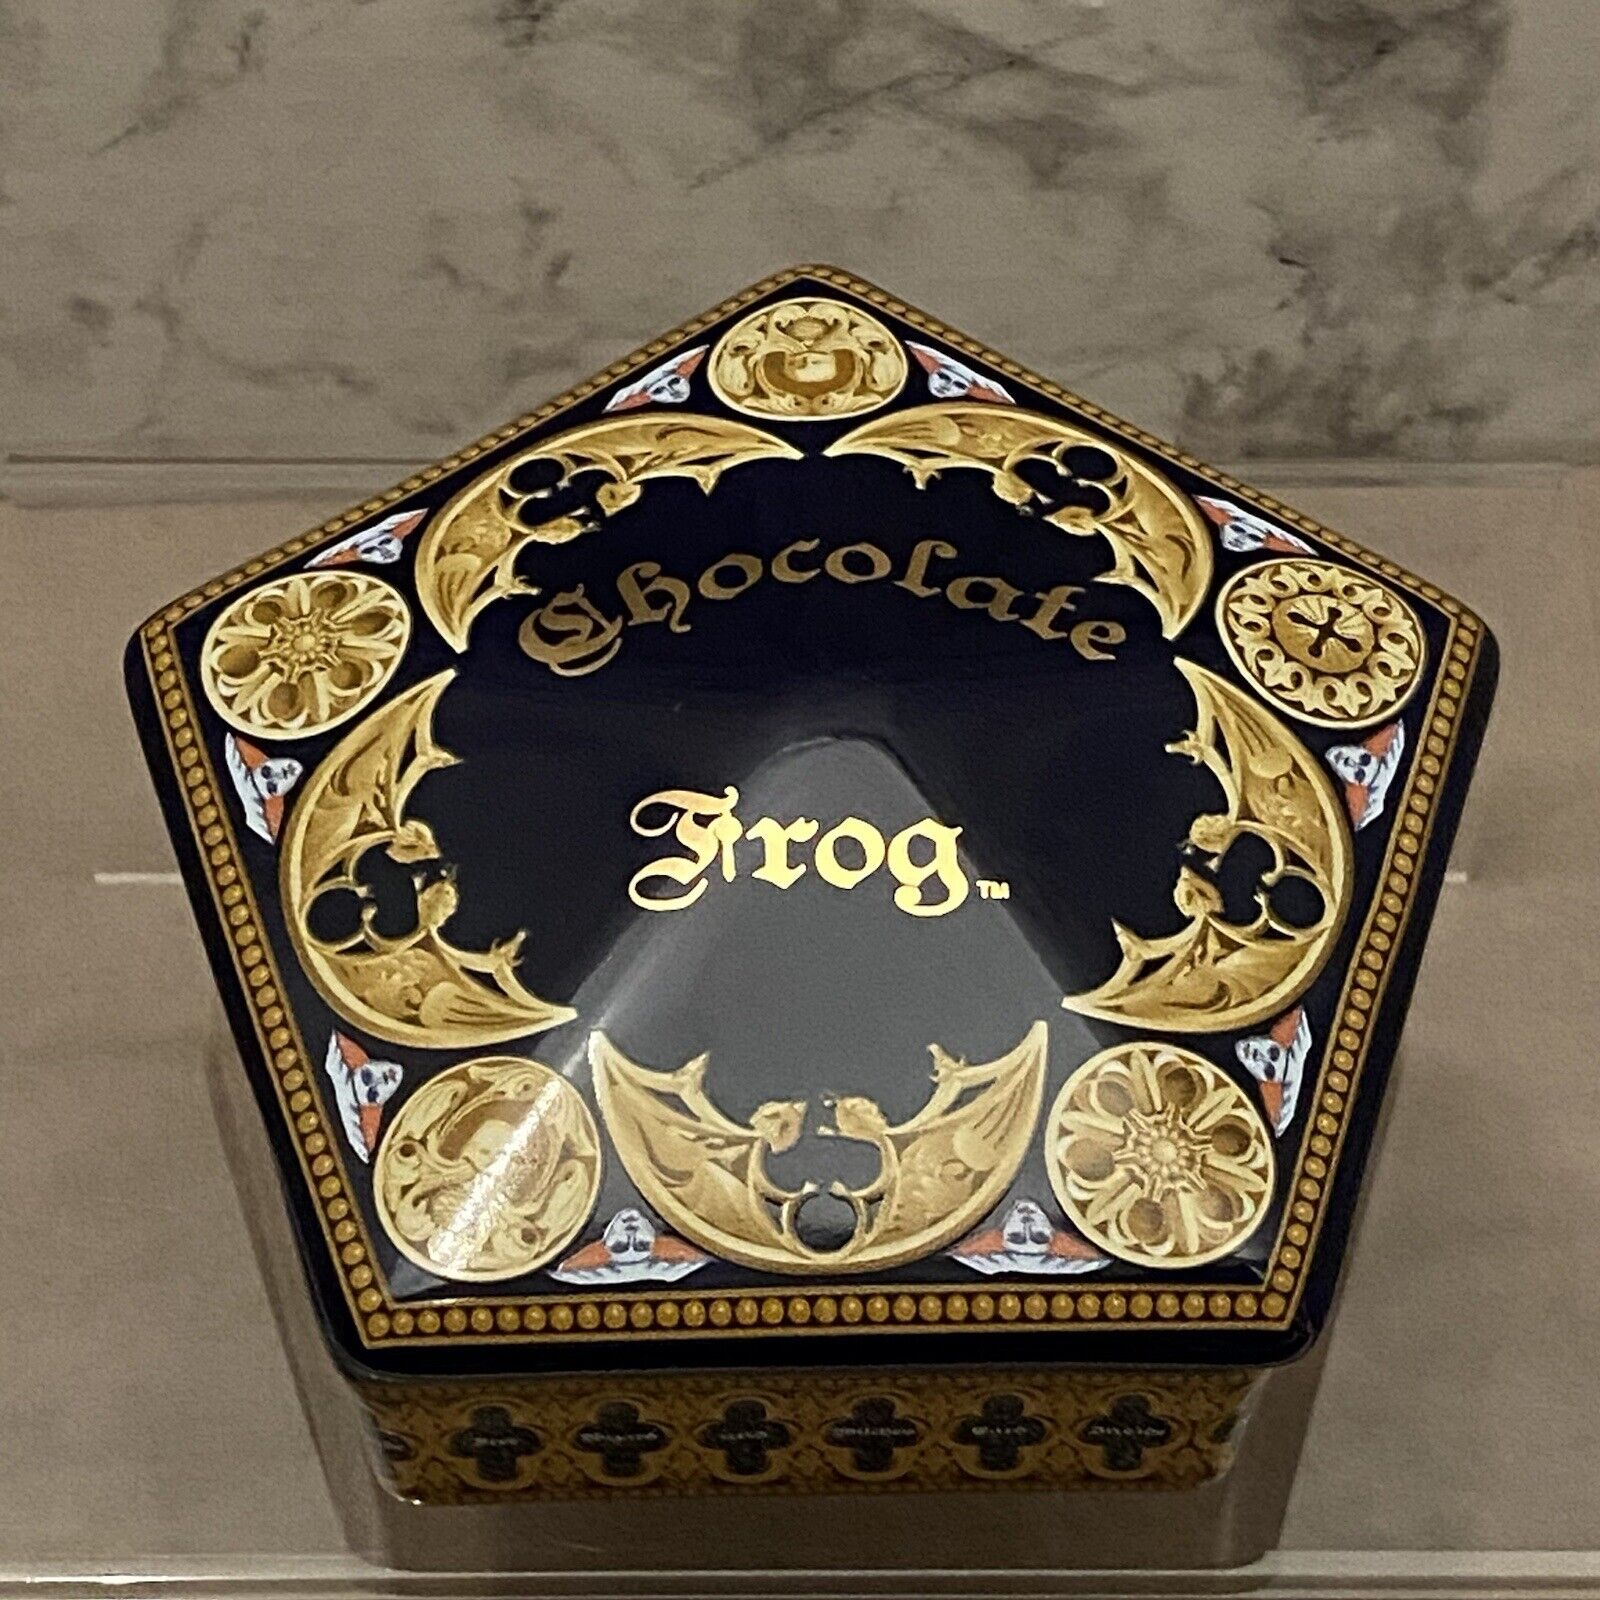 Ceramic Chocolate Frog Trinket Jewelry Box - Harry Potter Universal Studios New